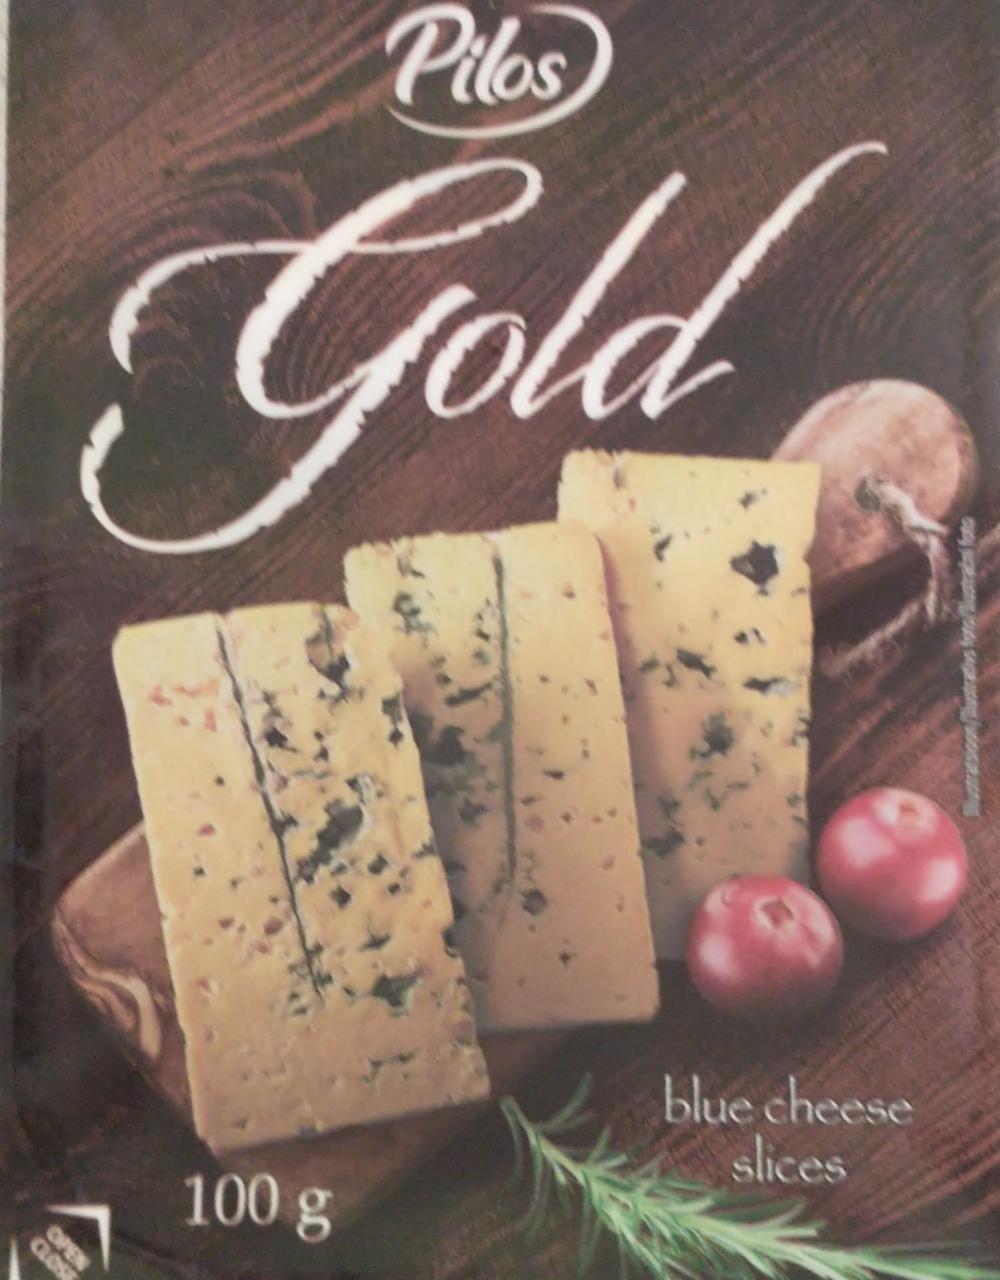 Fotografie - Gold blue cheese slices Pilos